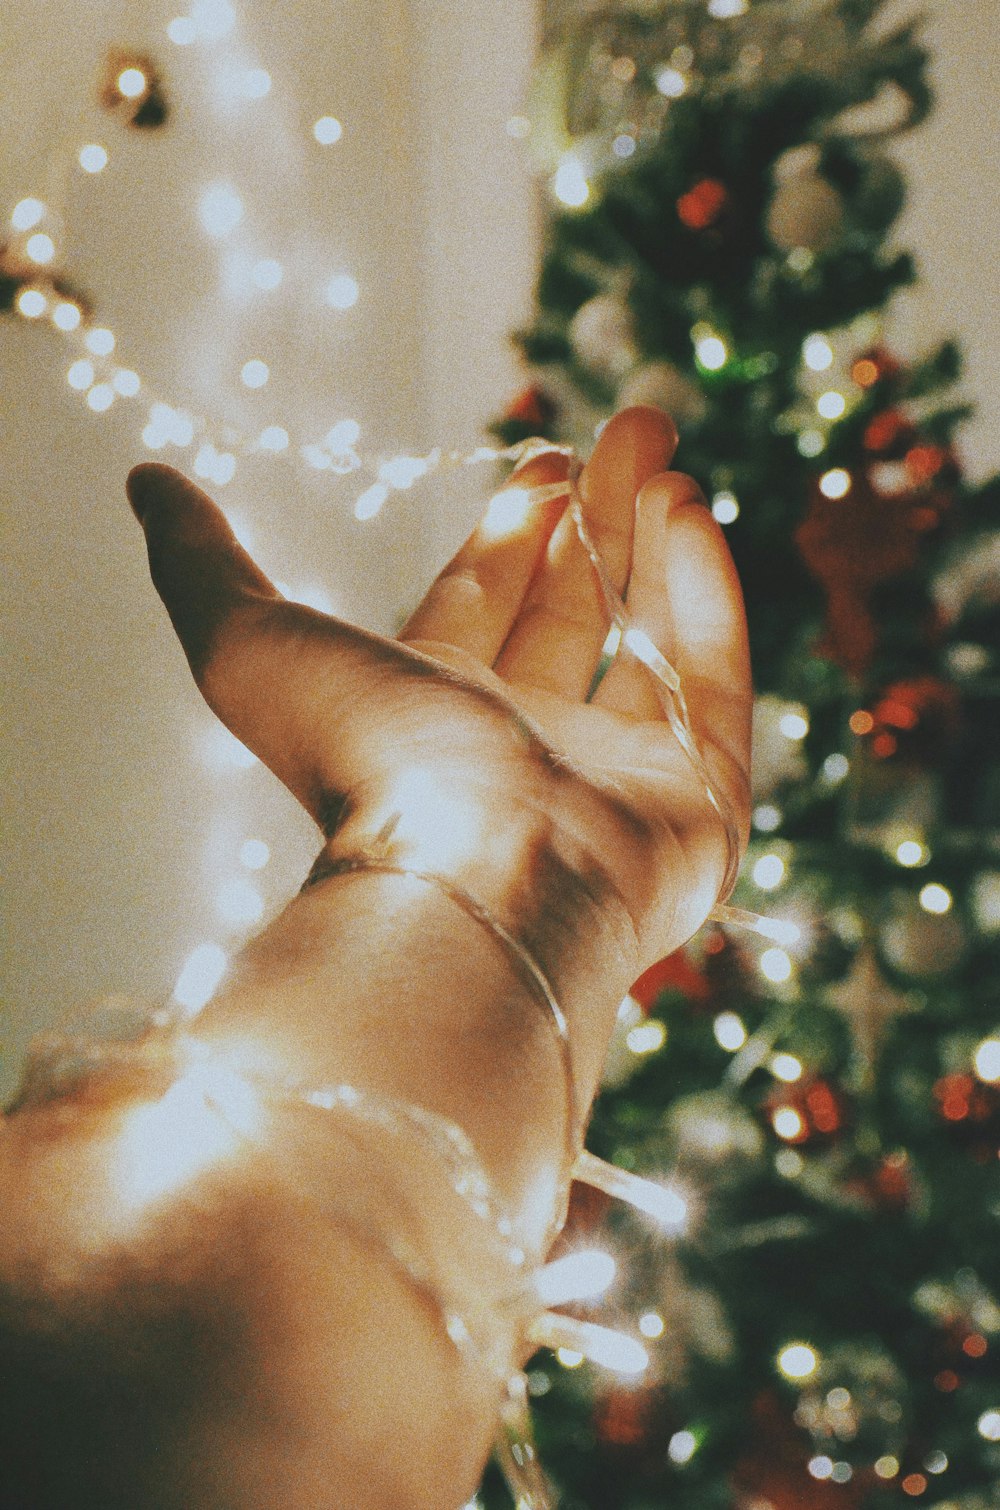 person holding stripe light near the Christmas tree